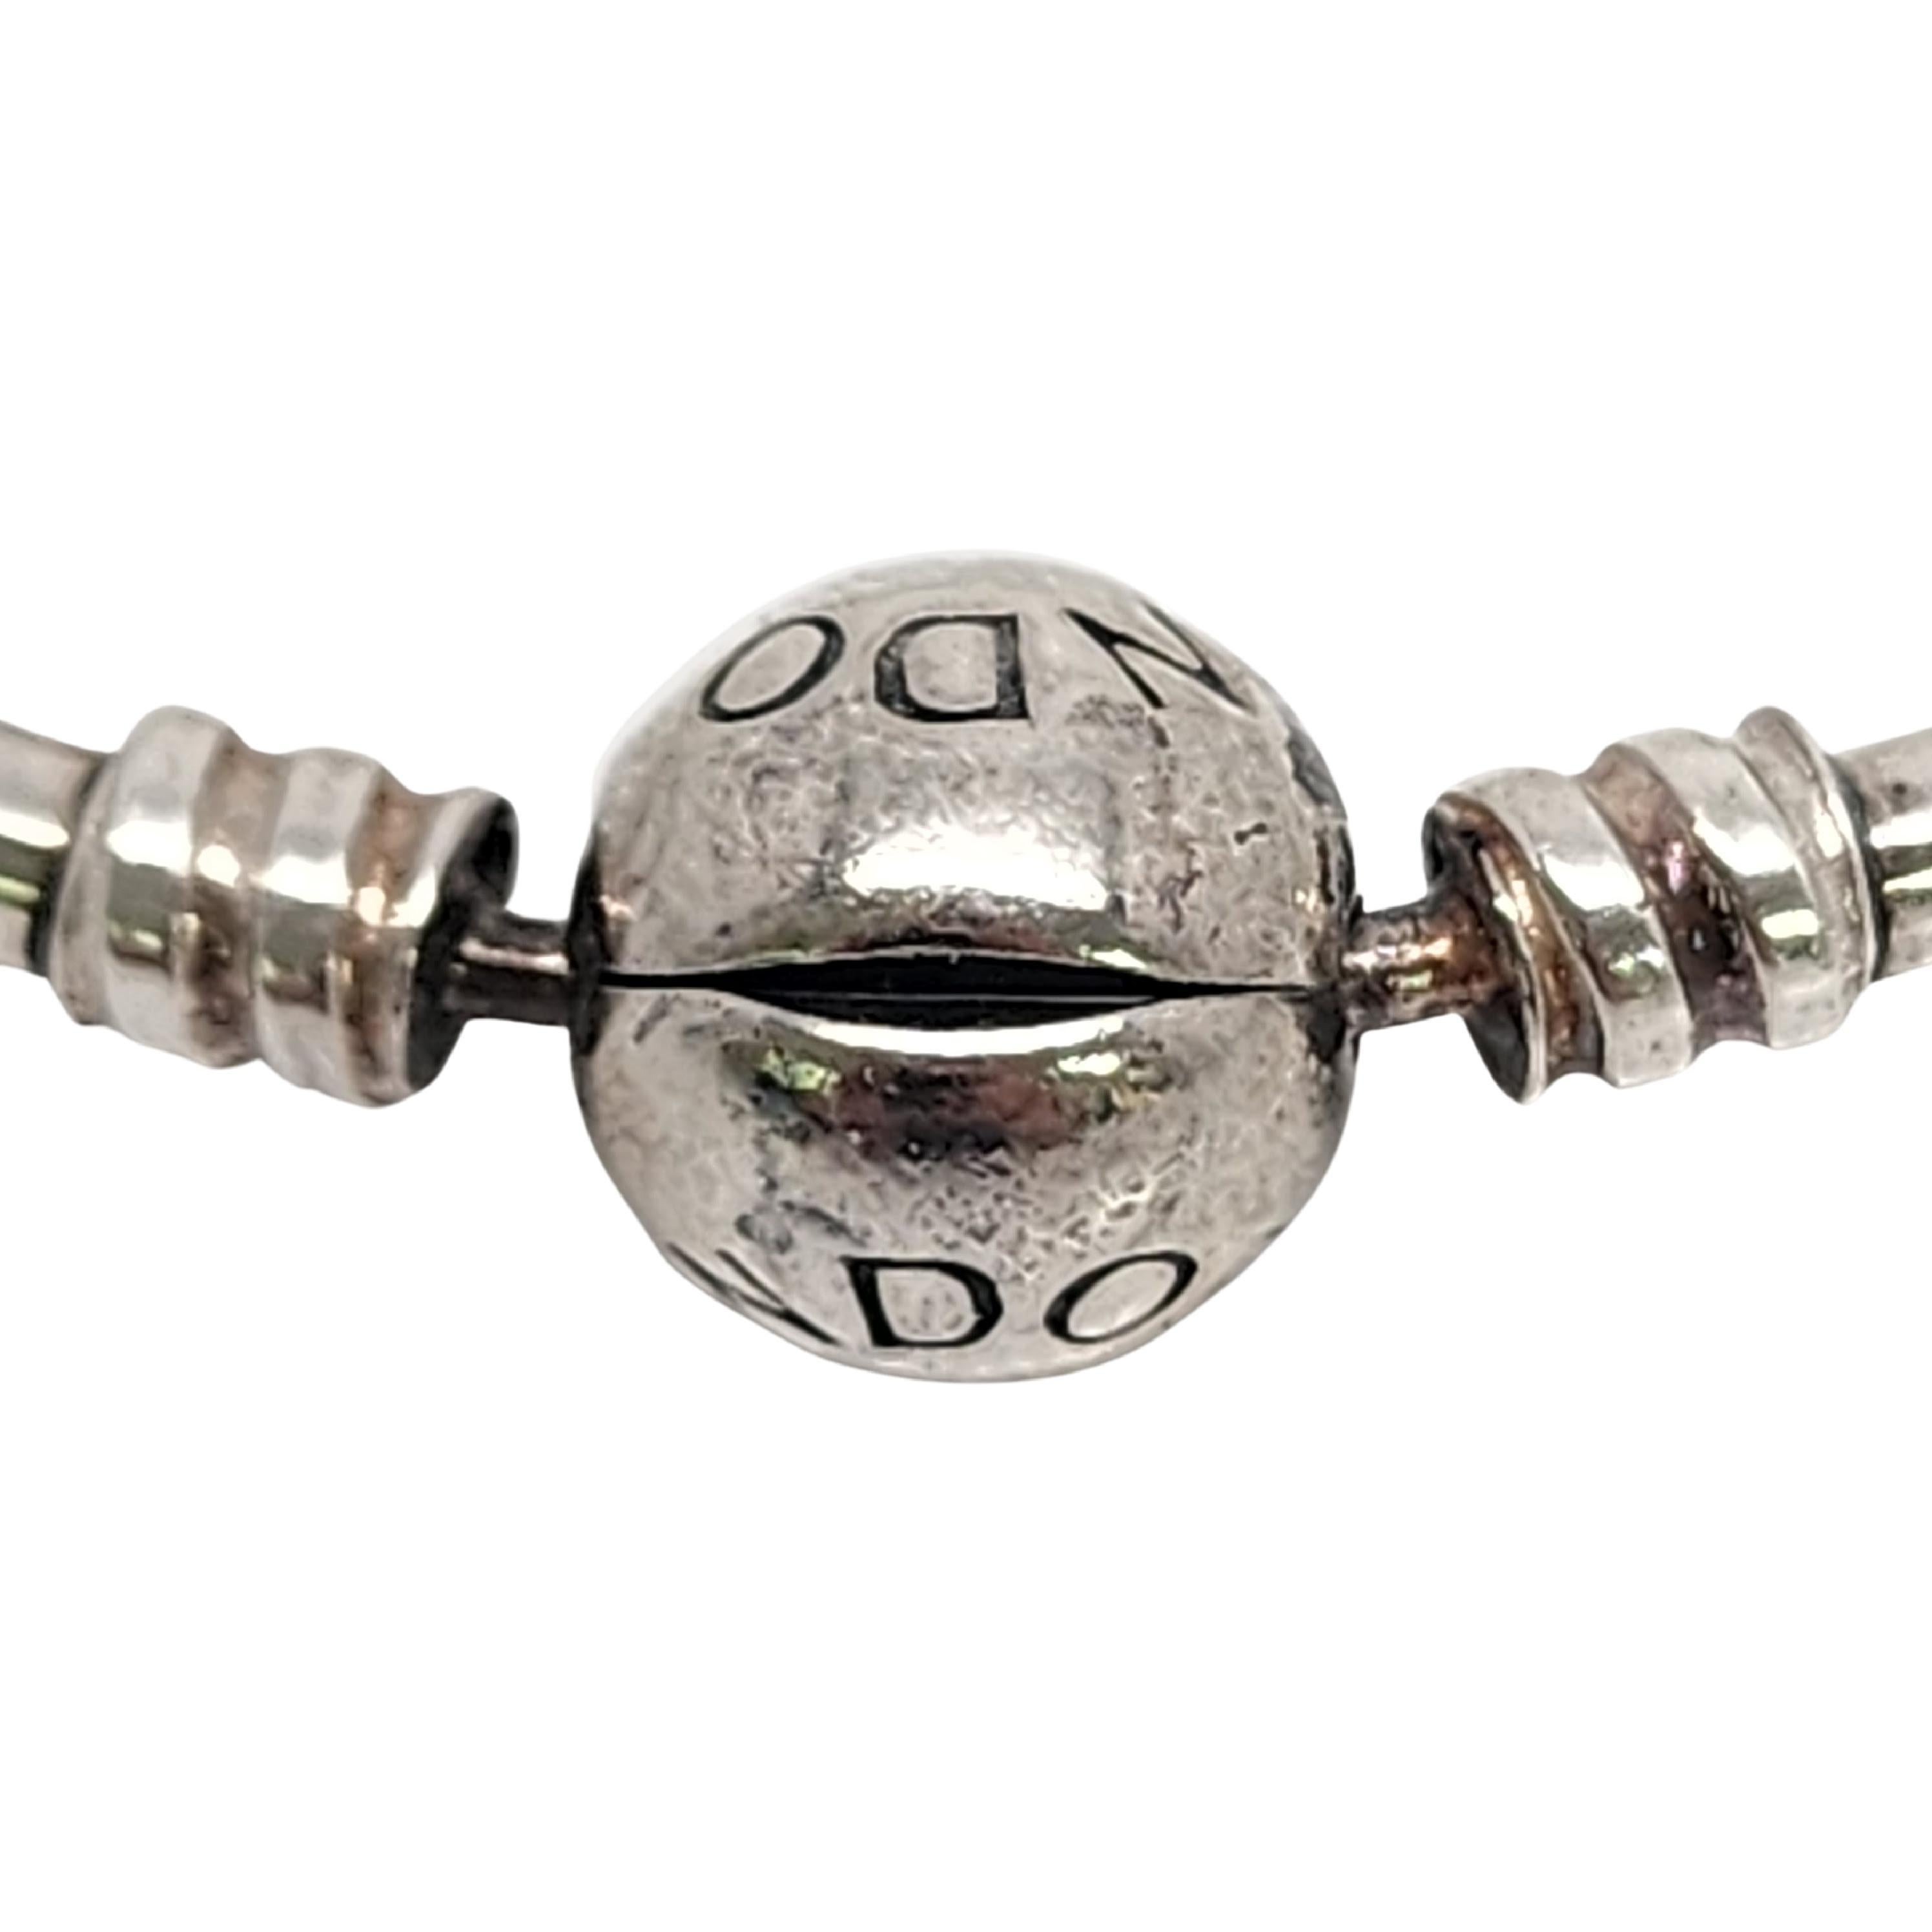 Authentic Pandora Moments Sterling Silver Bangle Bracelet (A) #15322 1